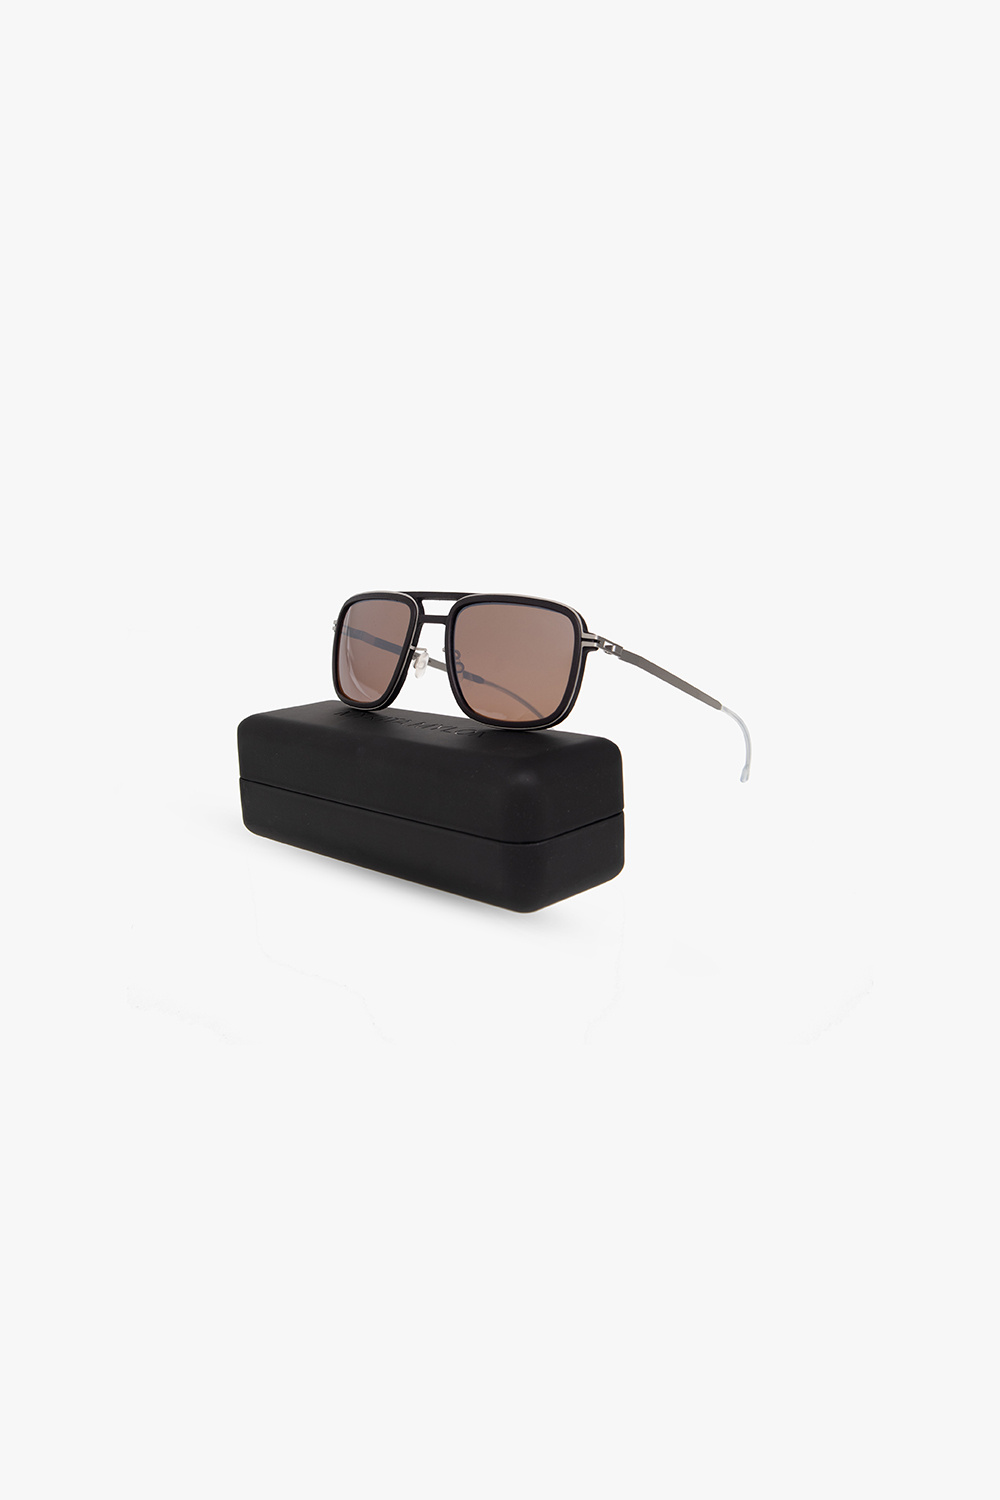 Mykita ‘Spruce’ sunglasses